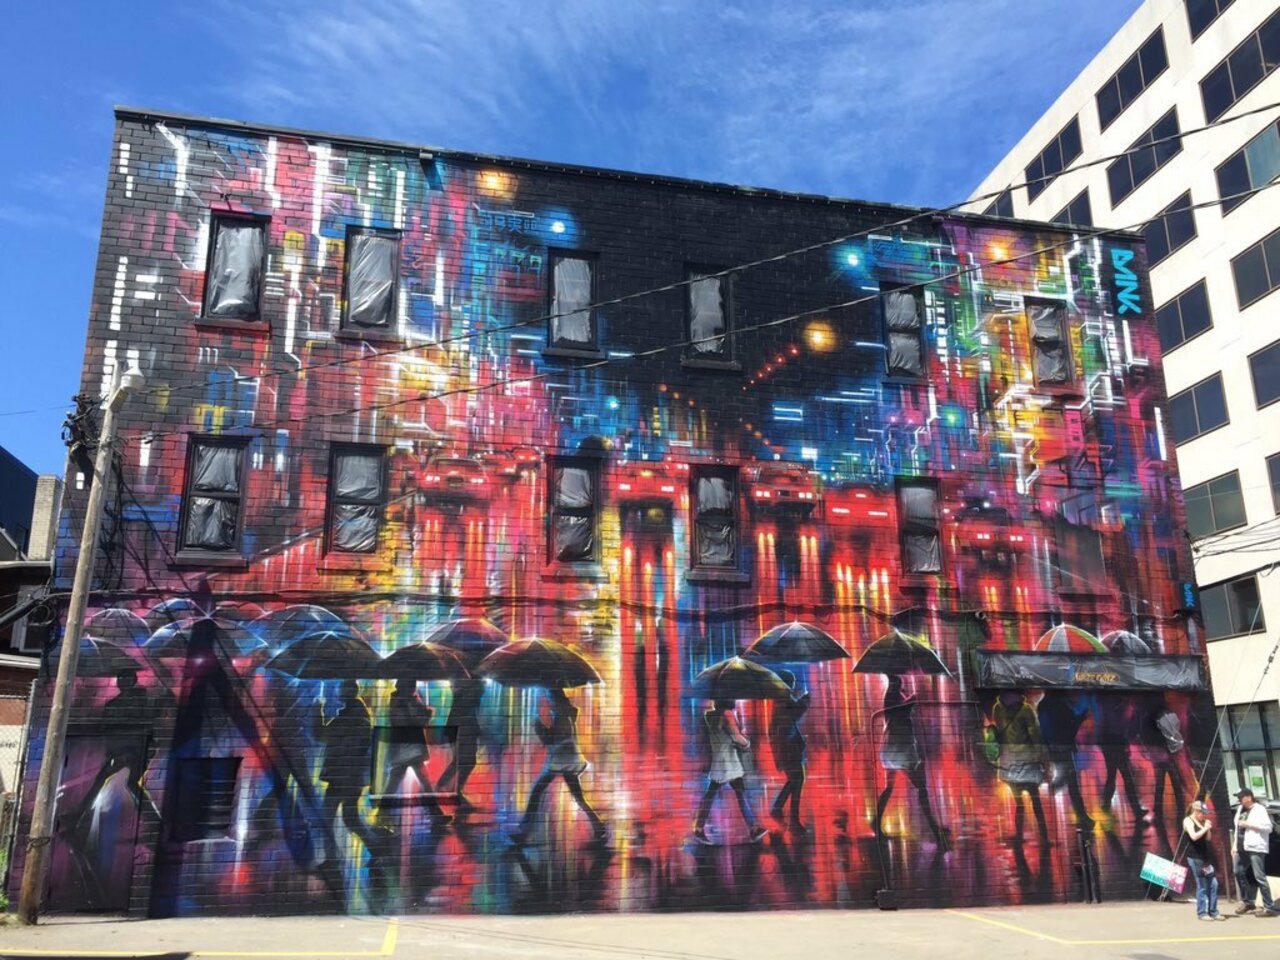 New Street Art by Dan Kitchener in Moncton Canada #art #mural #graffiti #streetart https://t.co/8LhgE21kCY